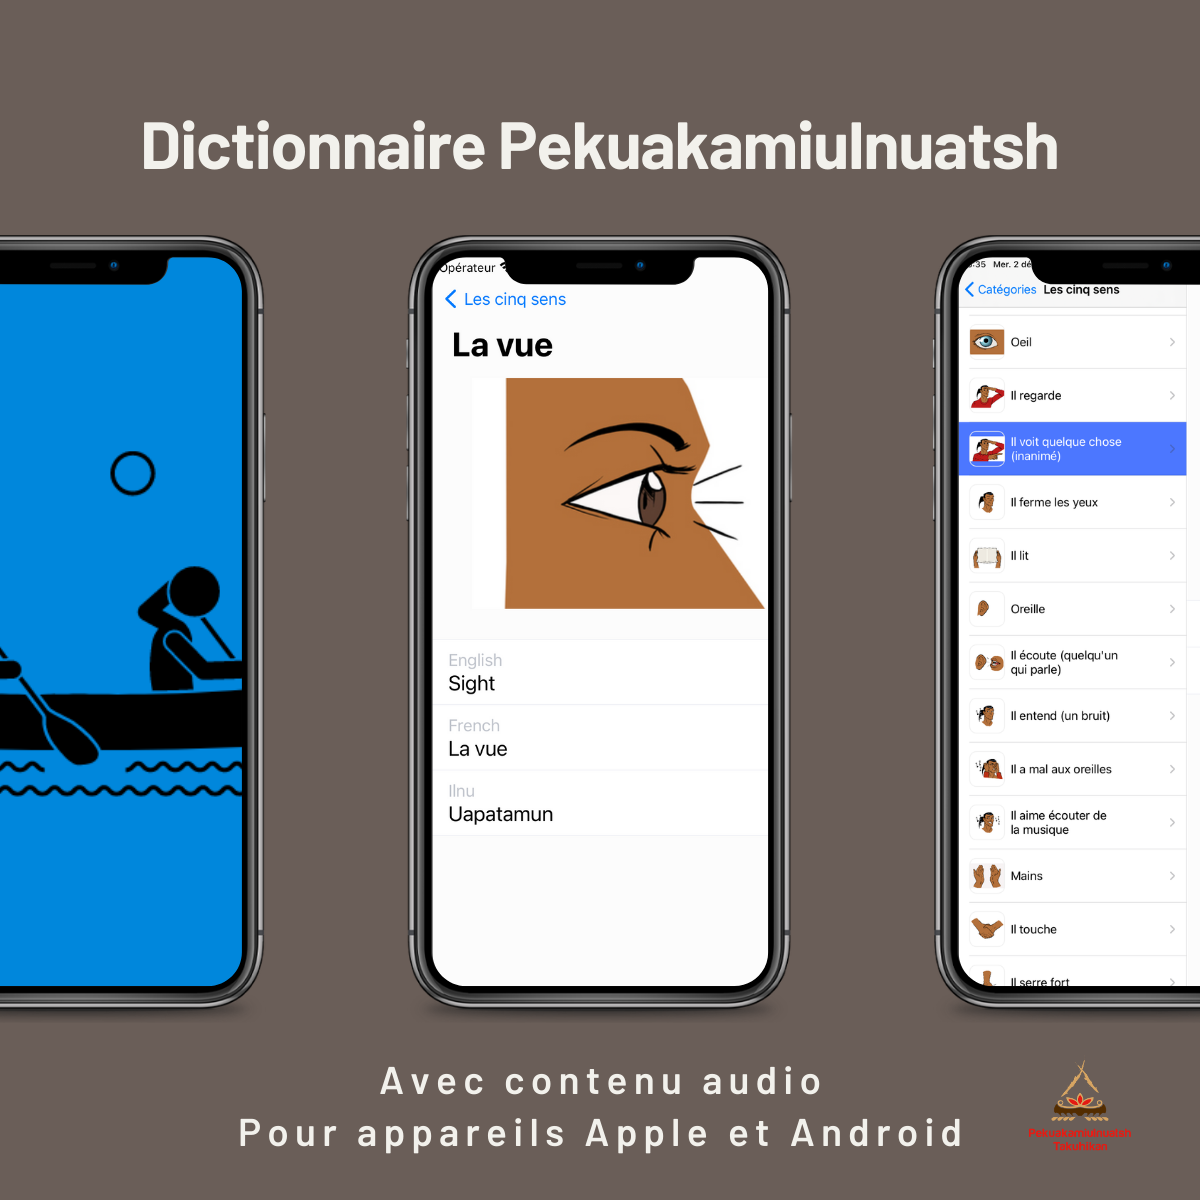 Dictionnaire Pekuakamiulnuatsh v2